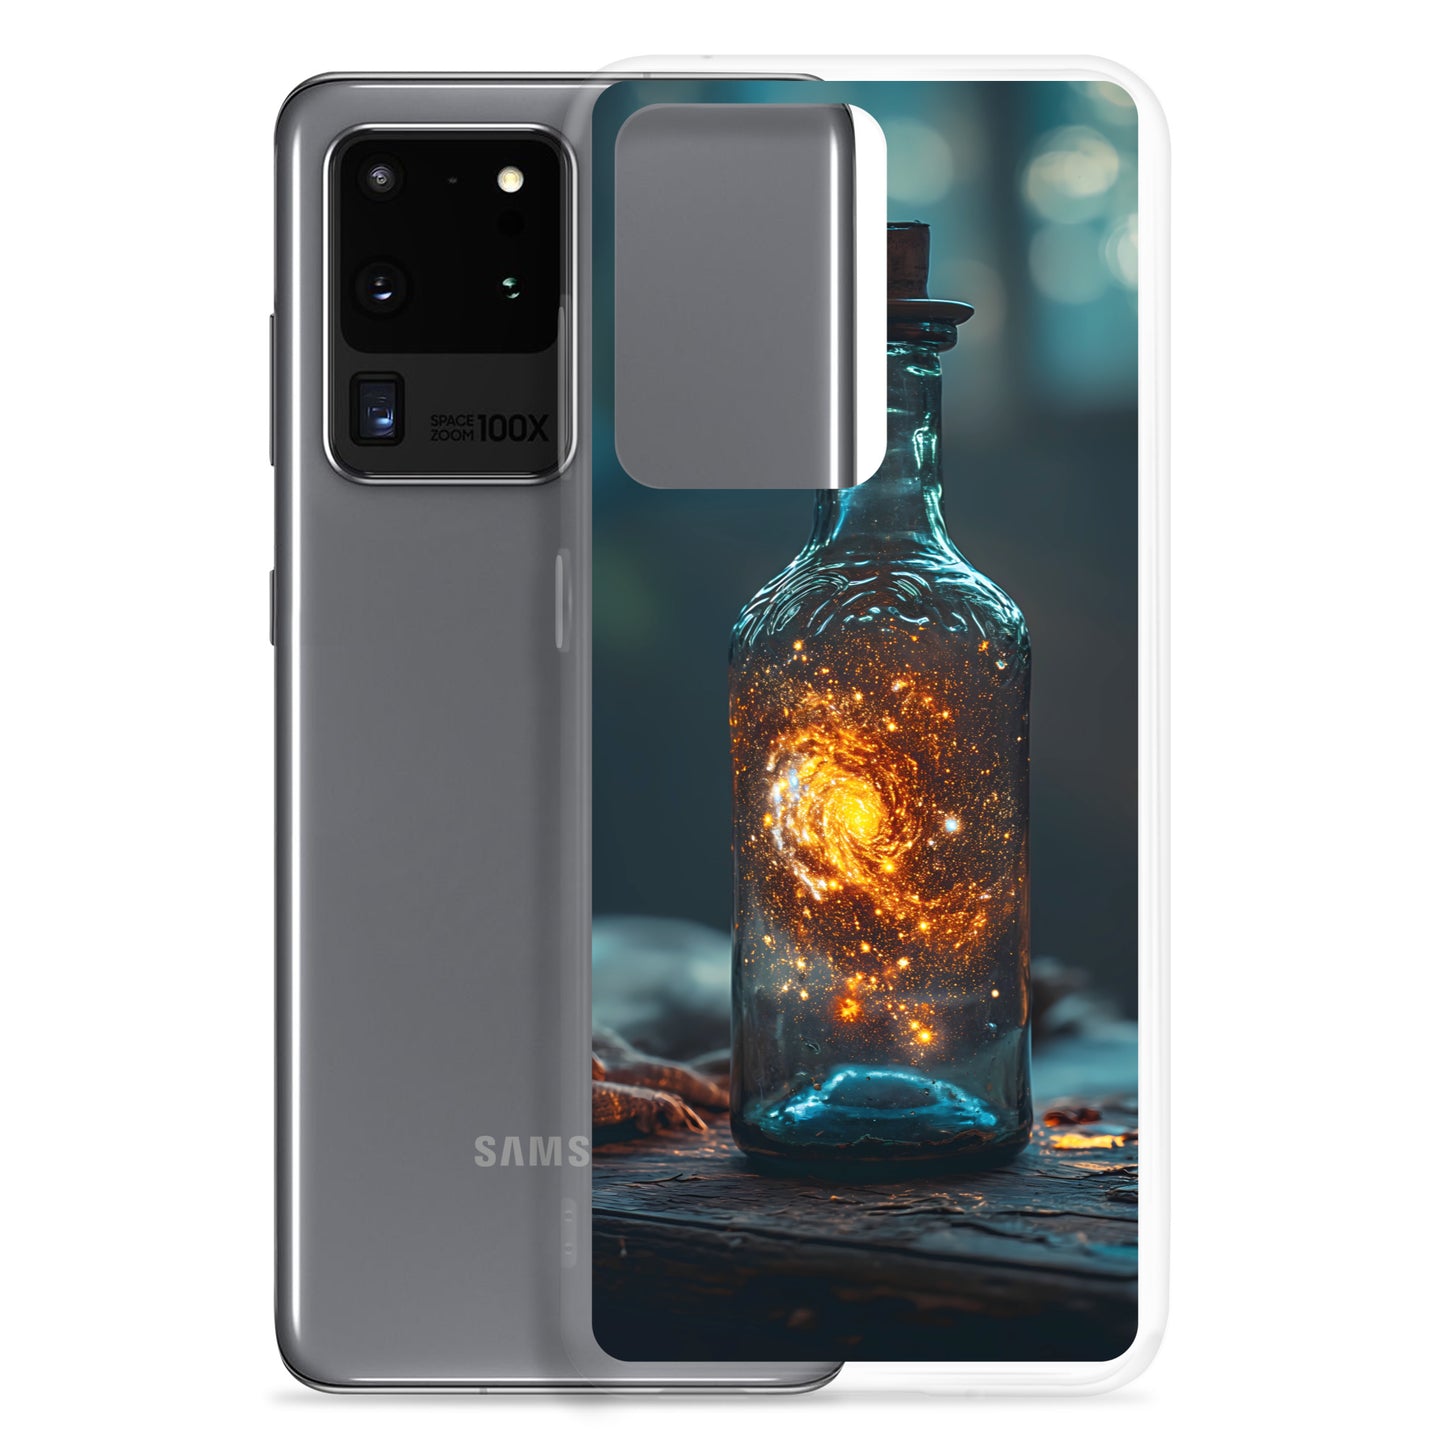 Samsung Case - Universe in a Bottle #3